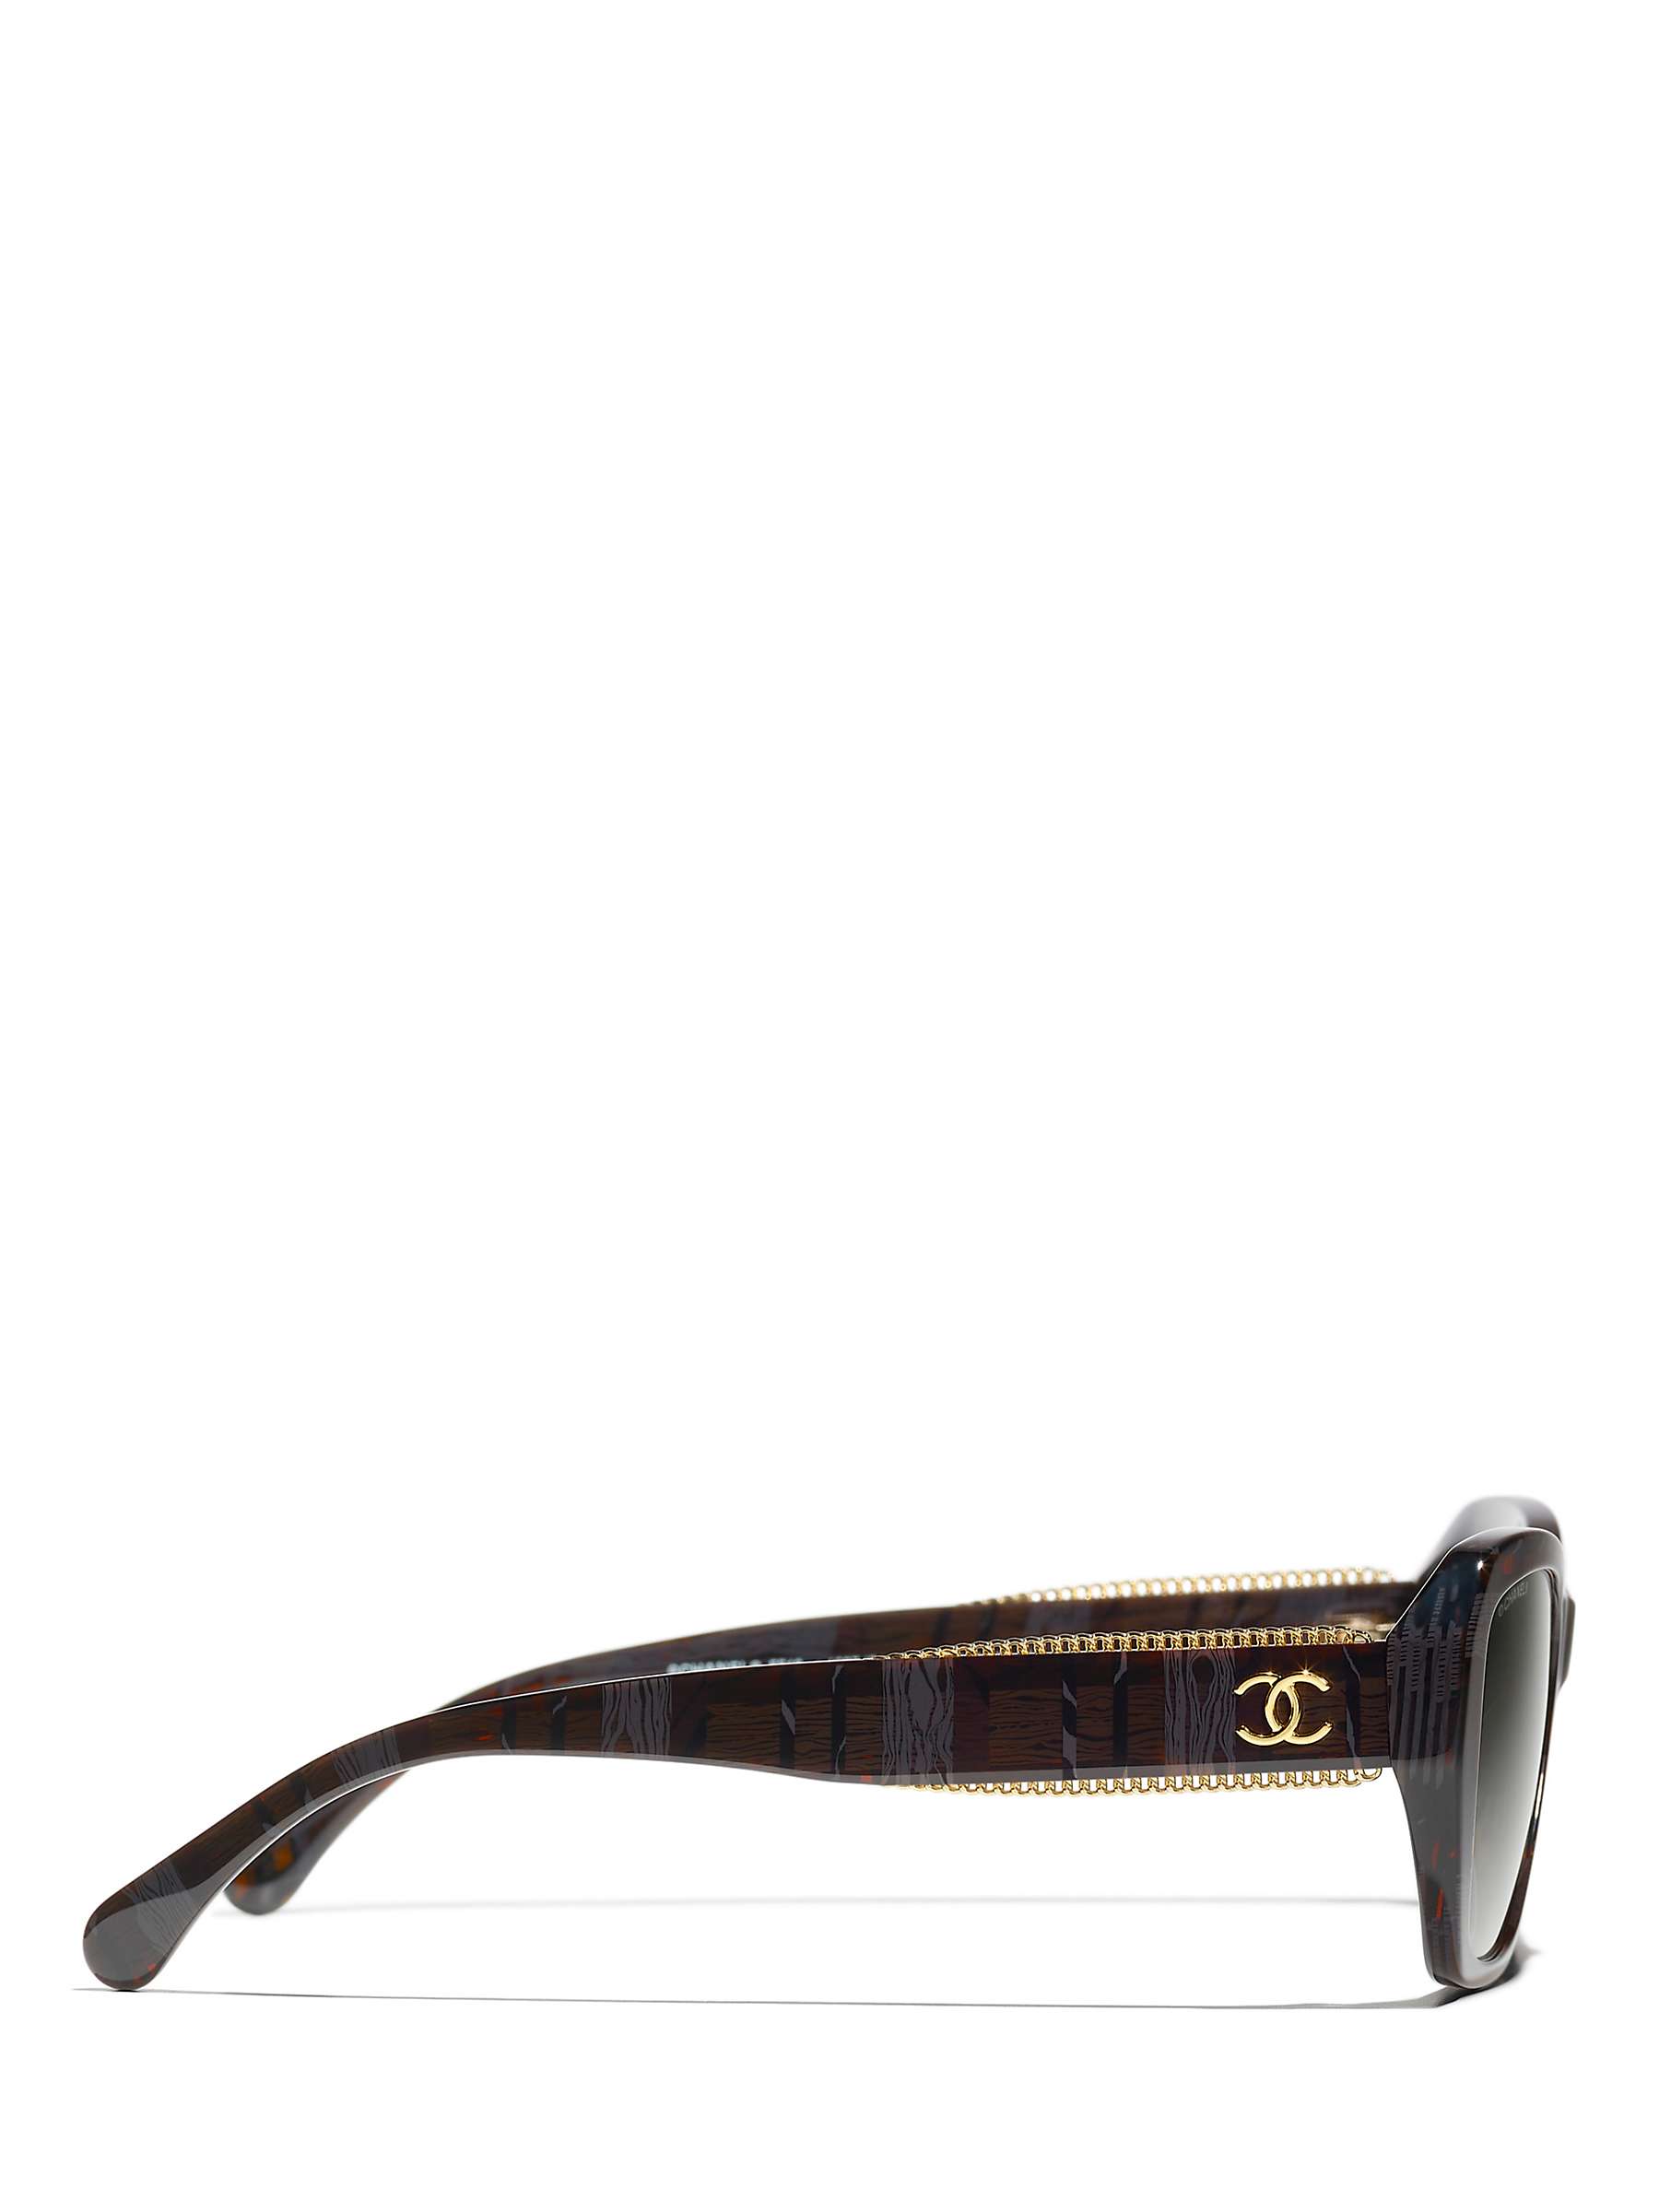 Buy CHANEL Rectangular Sunglasses CH5516 Black Tweed/Grey Gradient Online at johnlewis.com